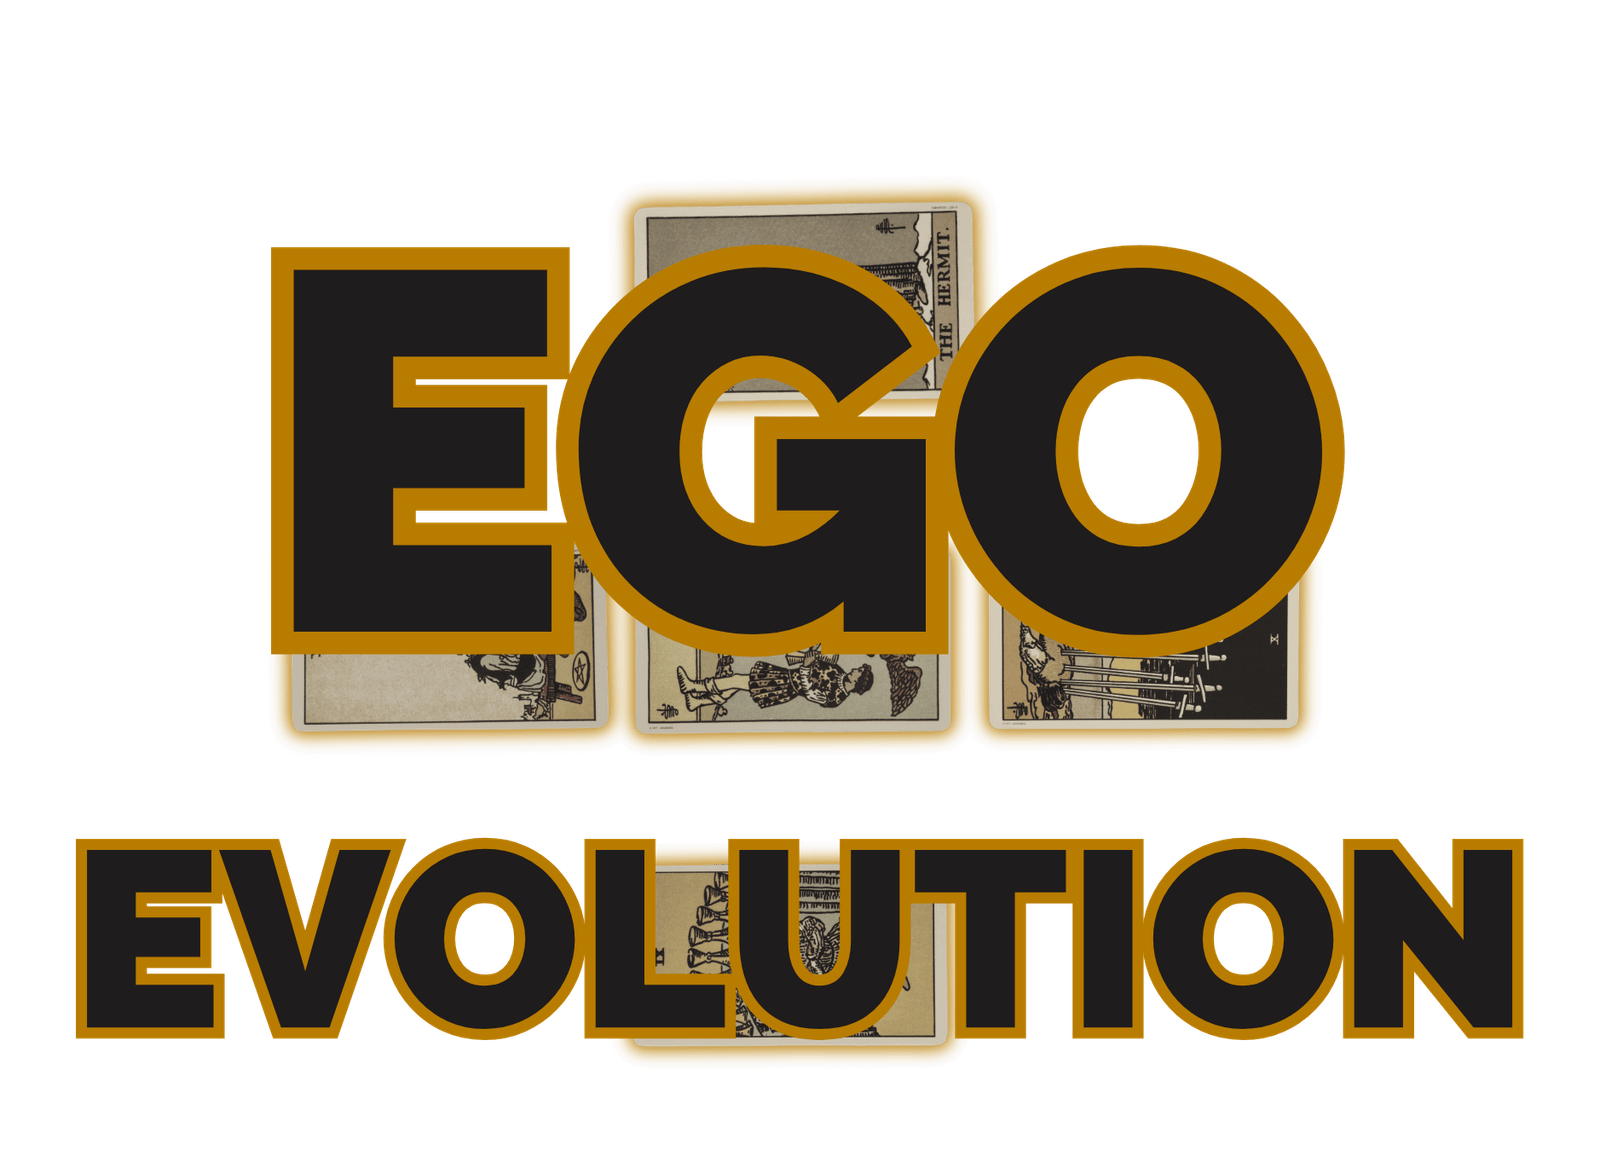 Ego evolution tarot spread | tarot with gord